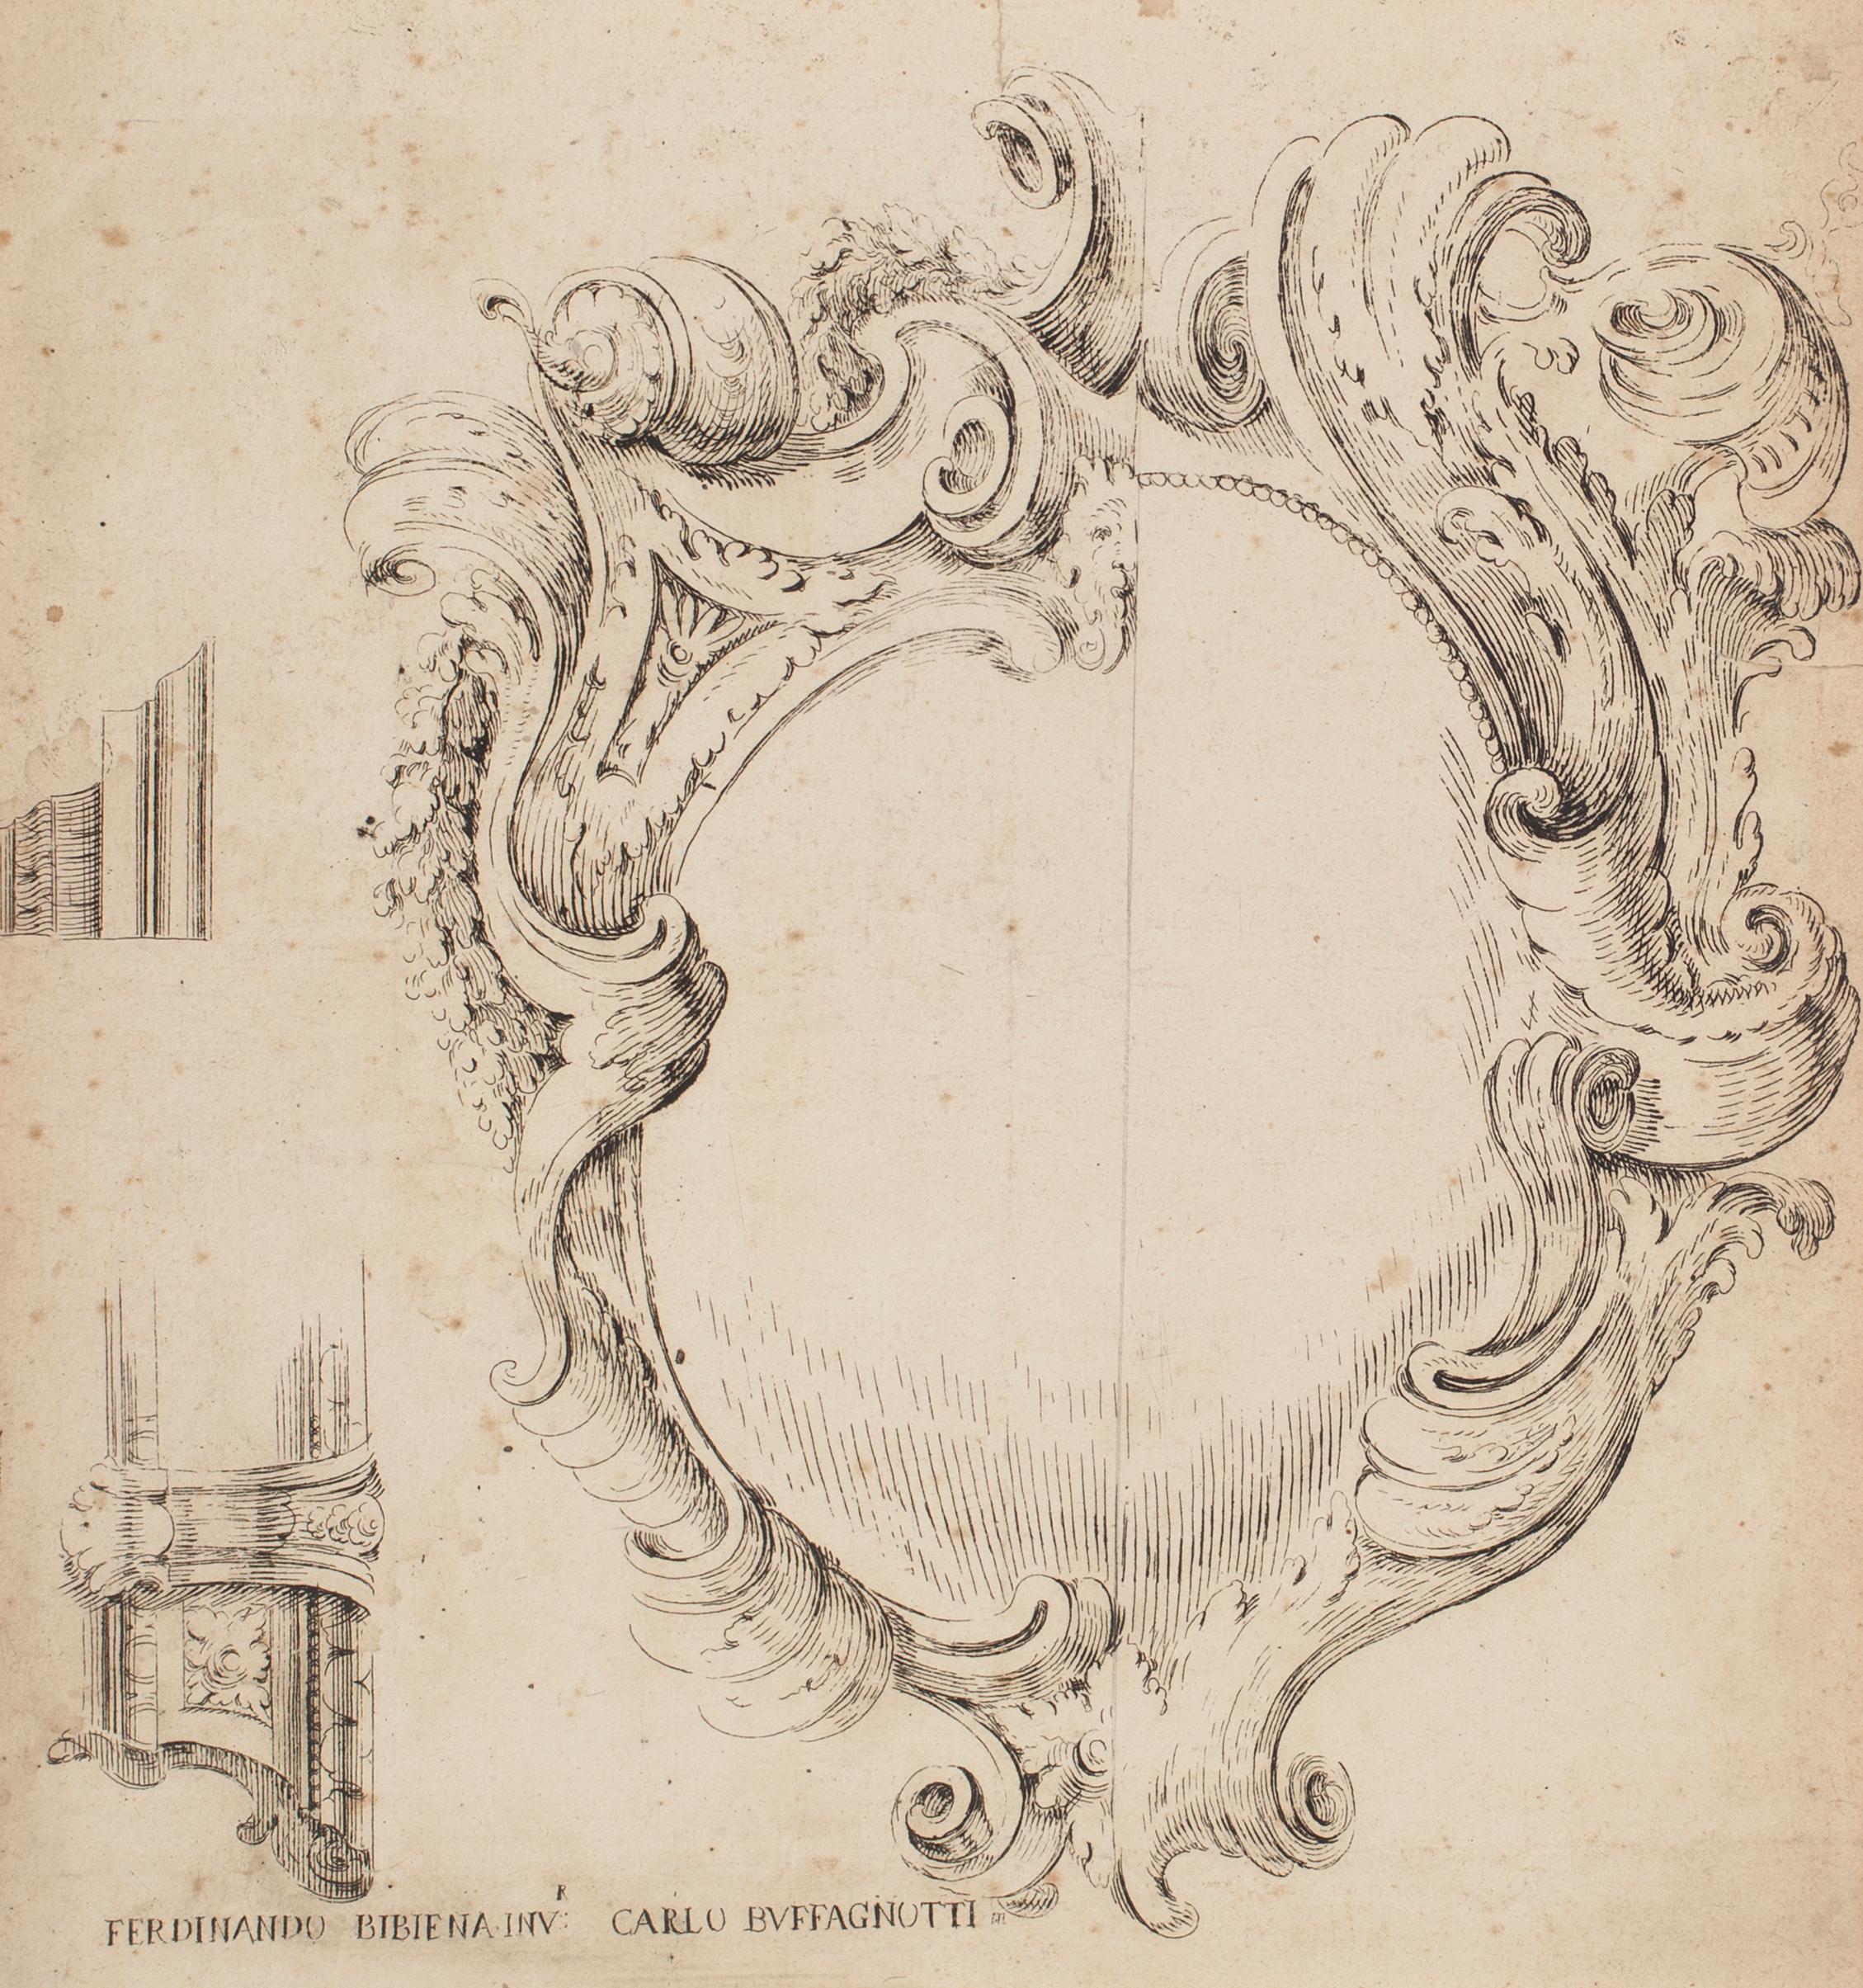 Ferdinando Bibiena Figurative Print - Mirror - Etching After F. Bibiena - Late 16th Century